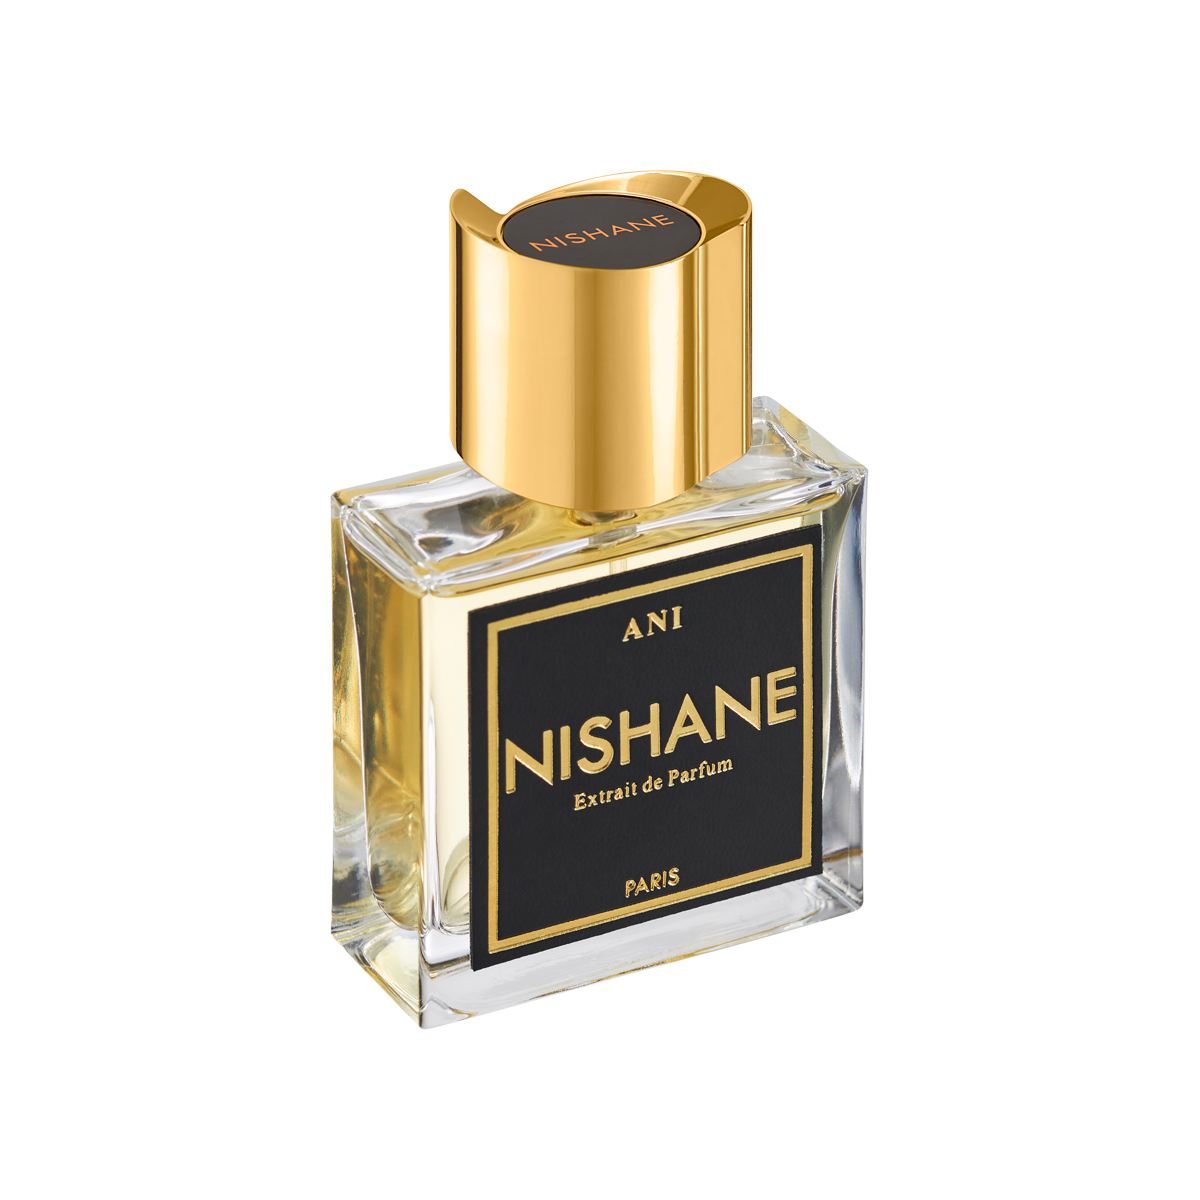 Nishane - Ani Extrait de Parfum